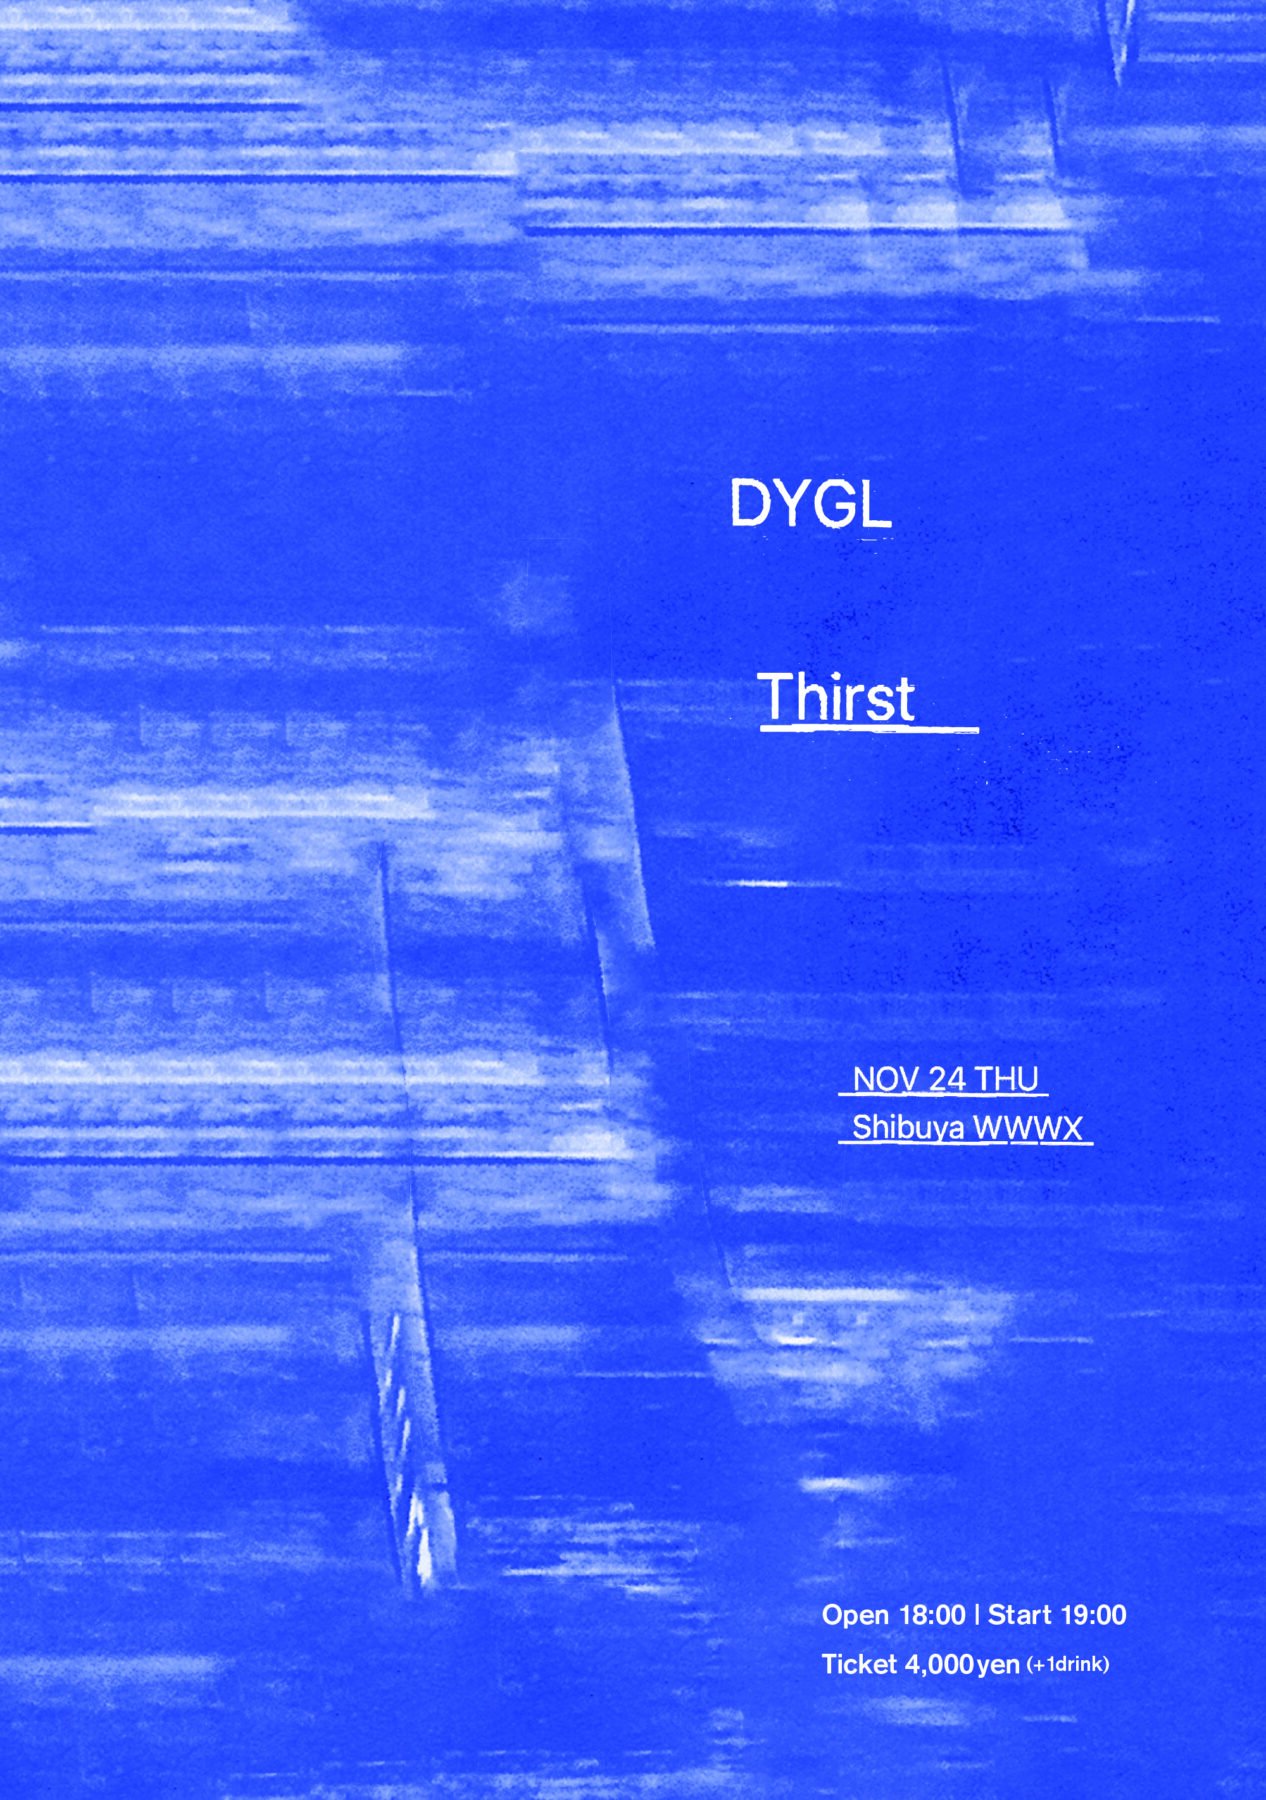 DYGL presents “Thirst”